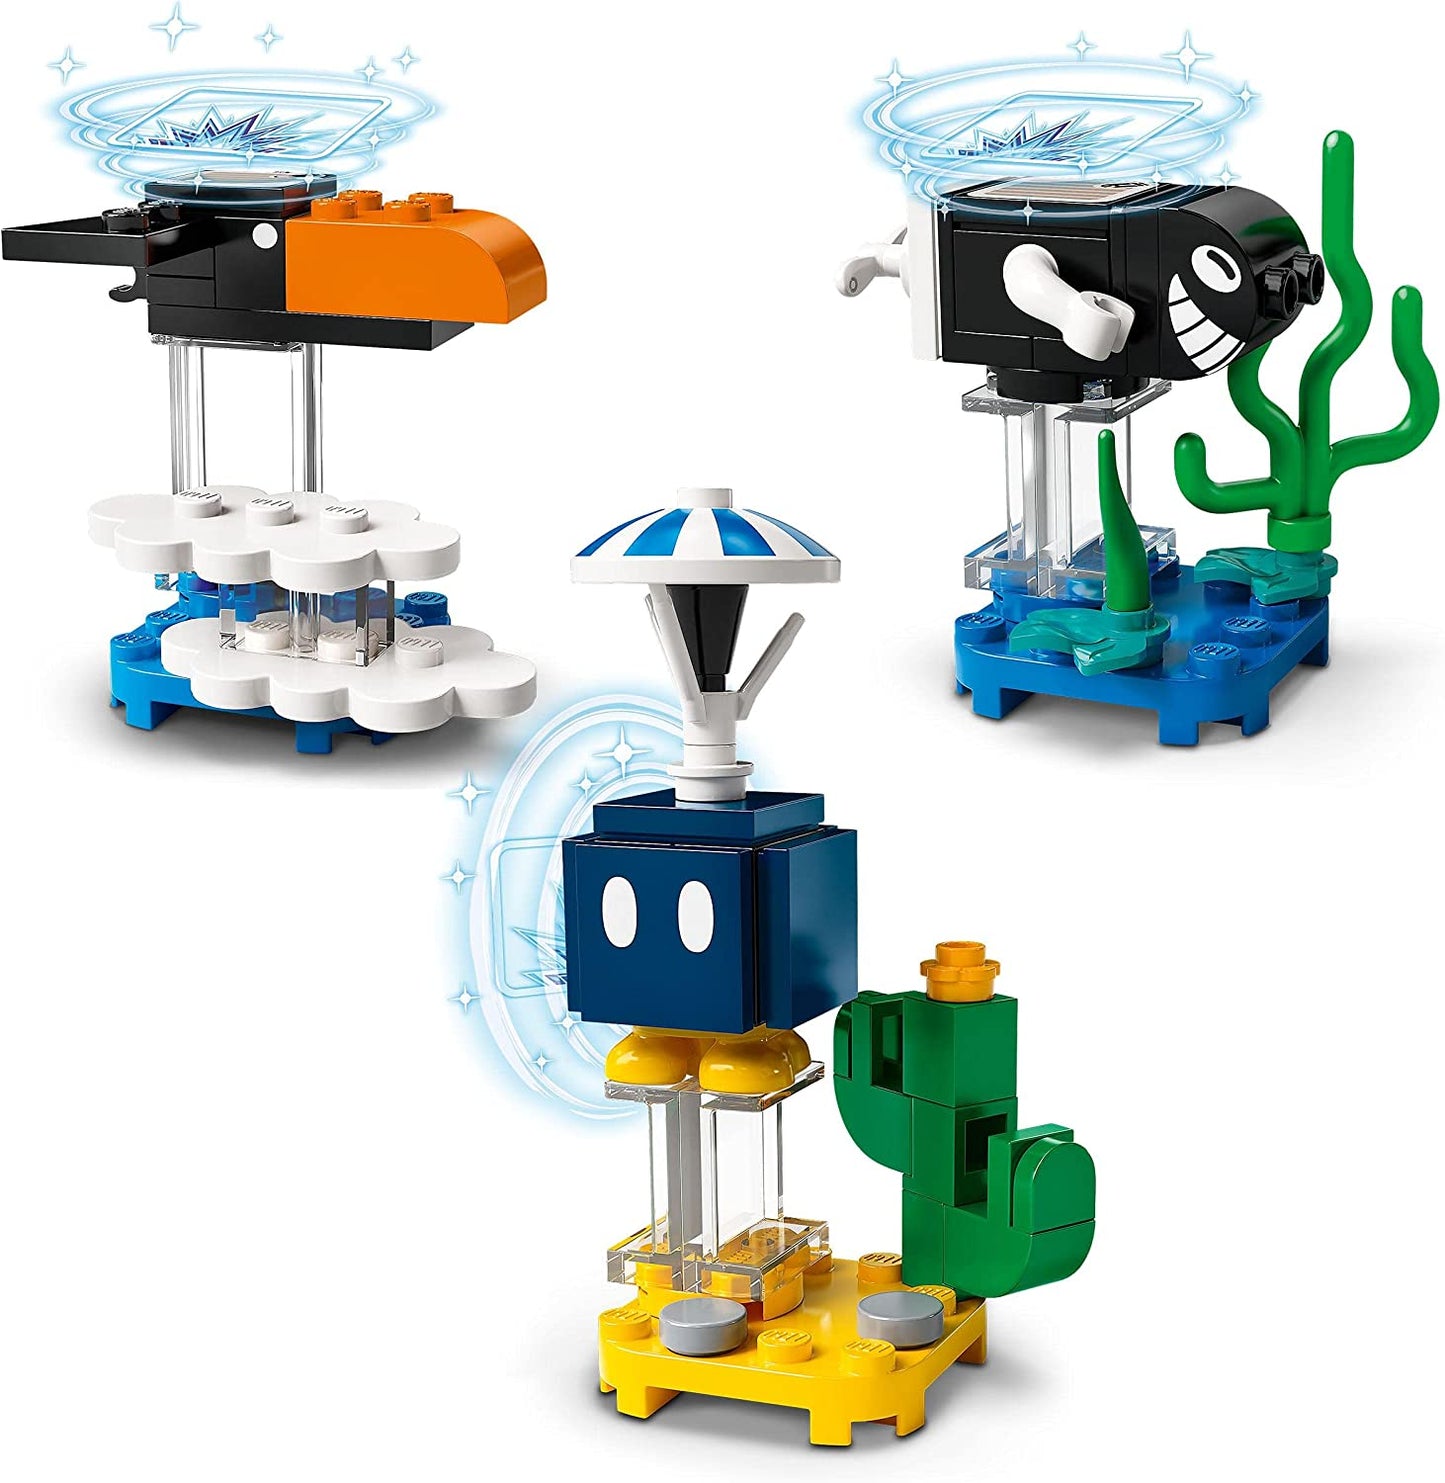 LEGO 71394 Super Mario Character Packs – Series 3